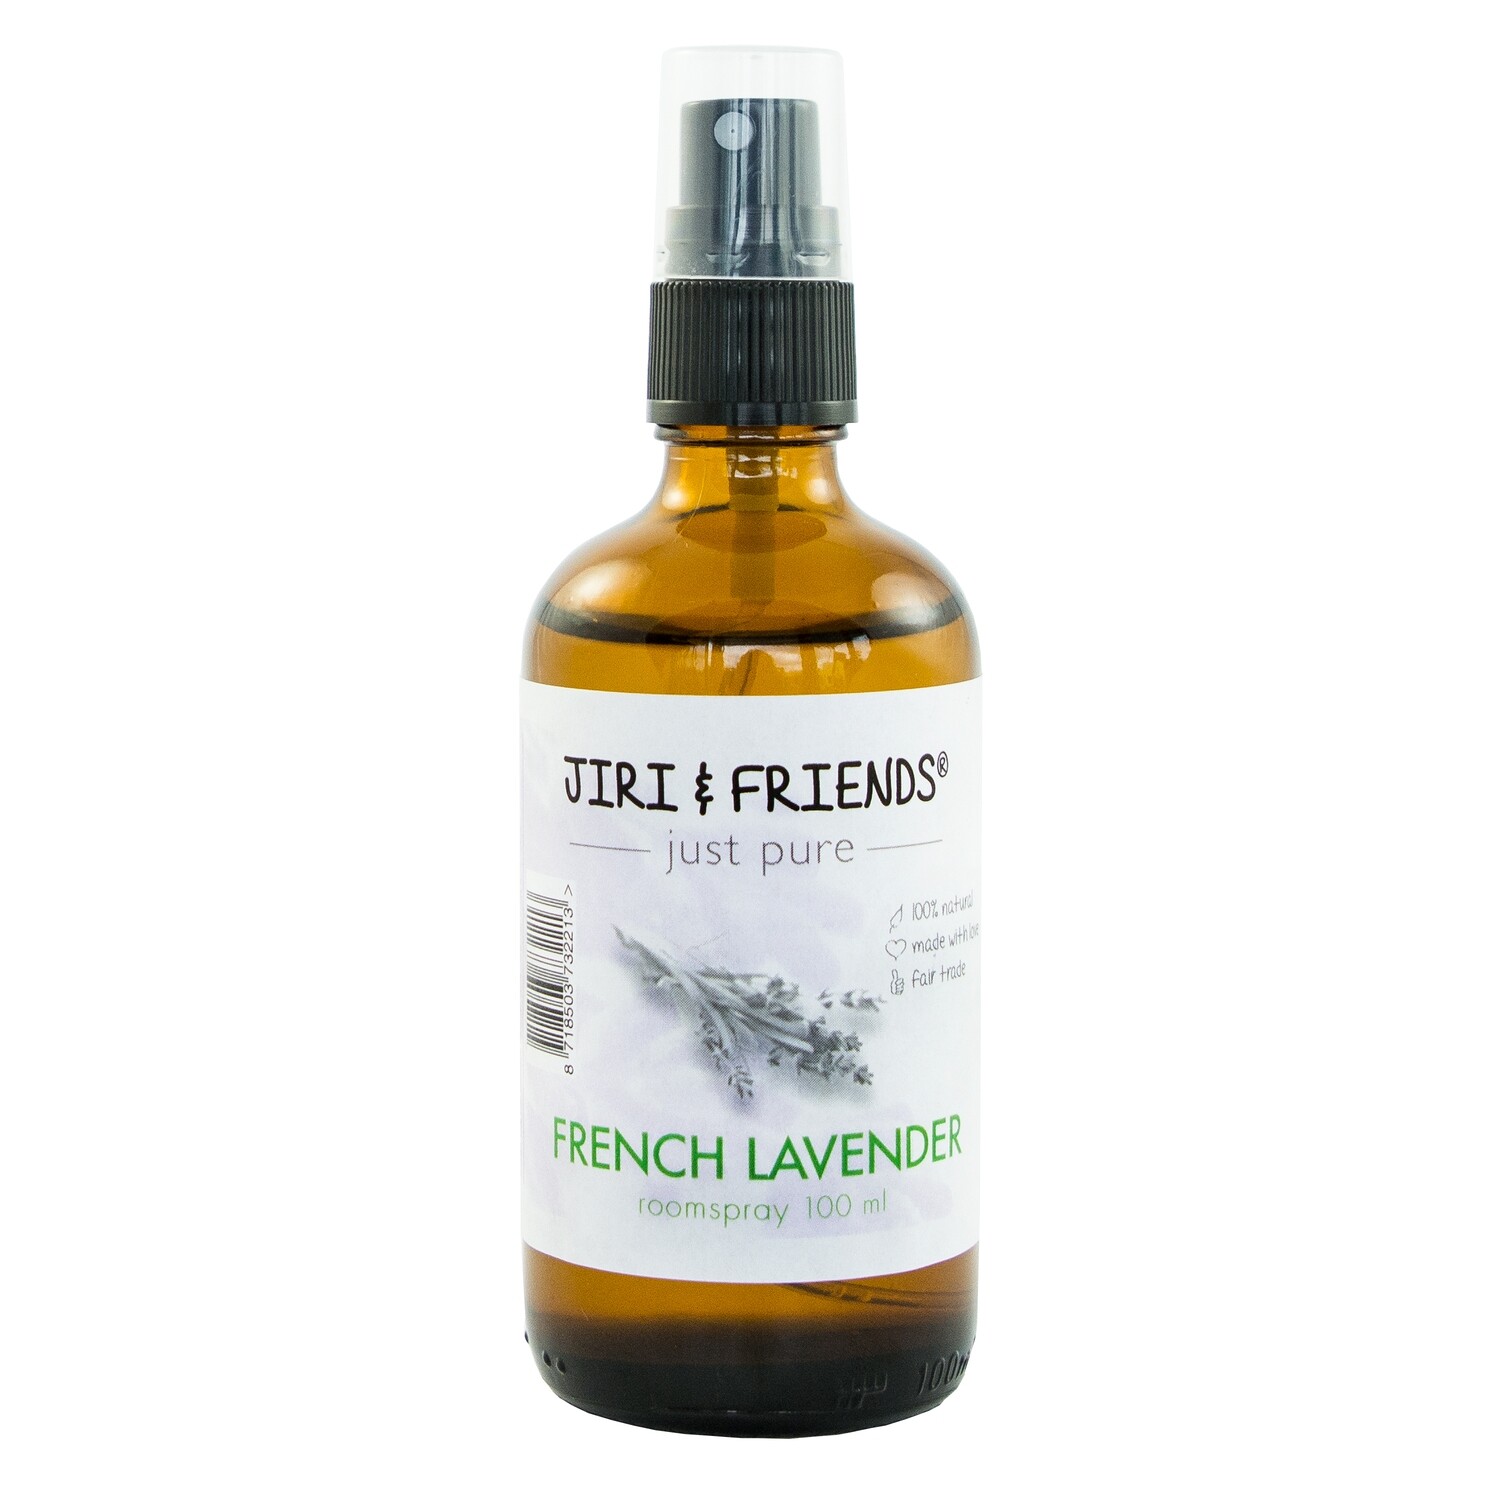 French Lavendel Aromatherapy spray 100ml